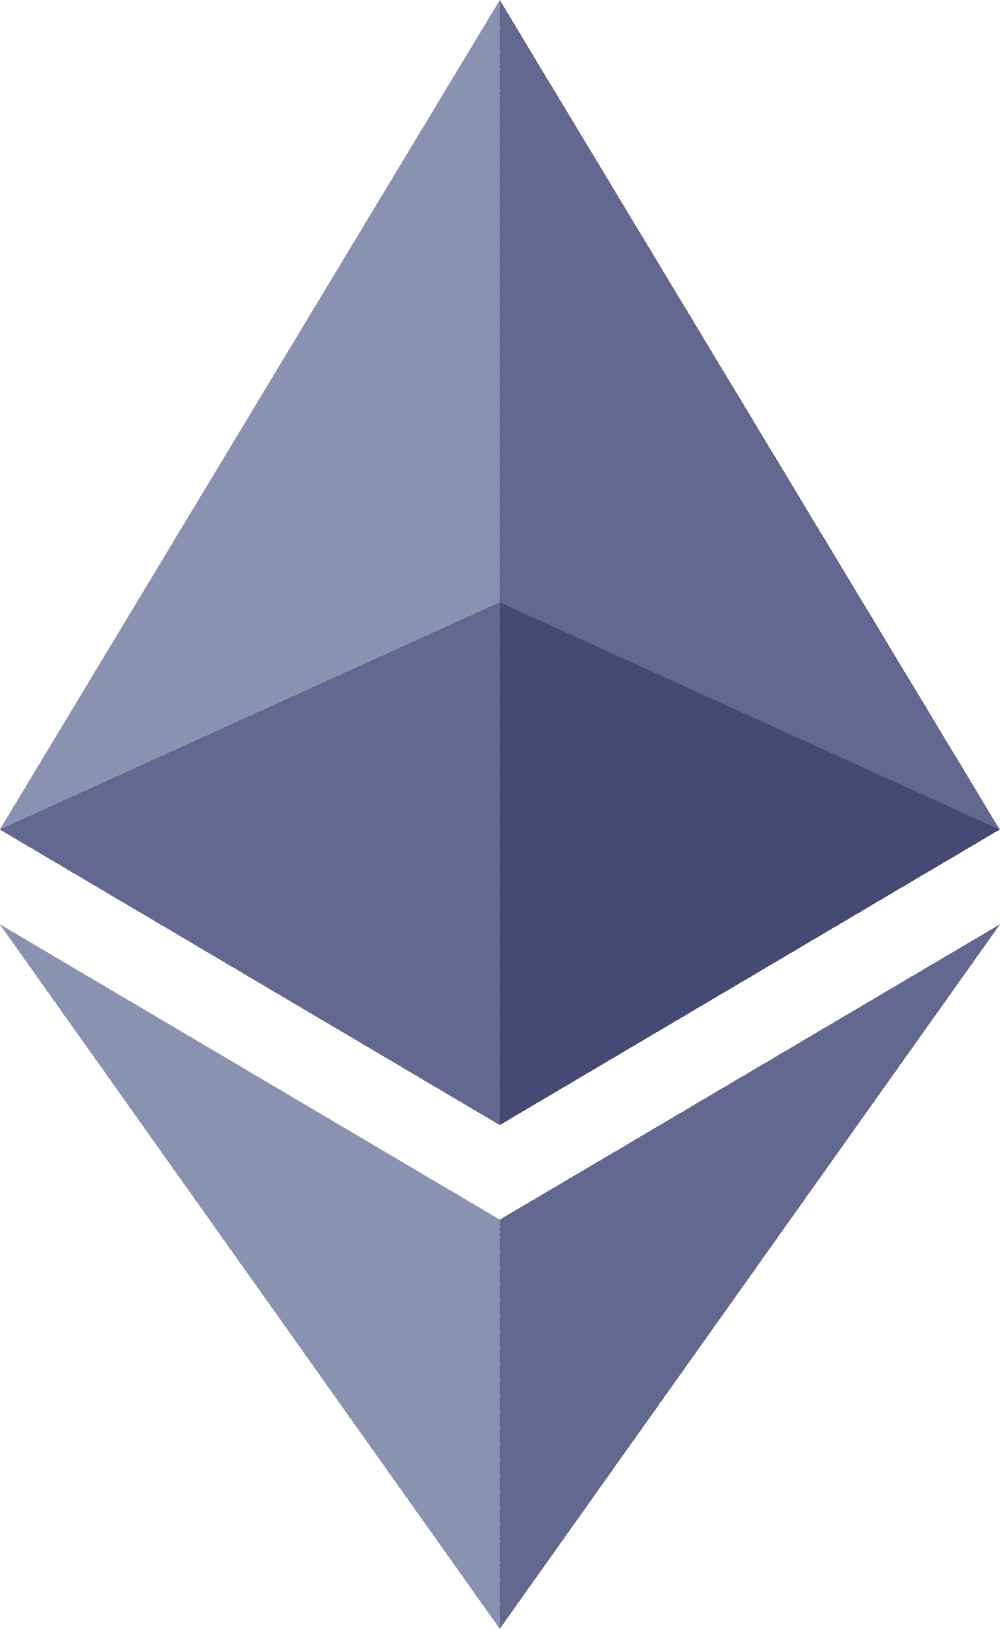 Ethereum Logo PNG Image HD